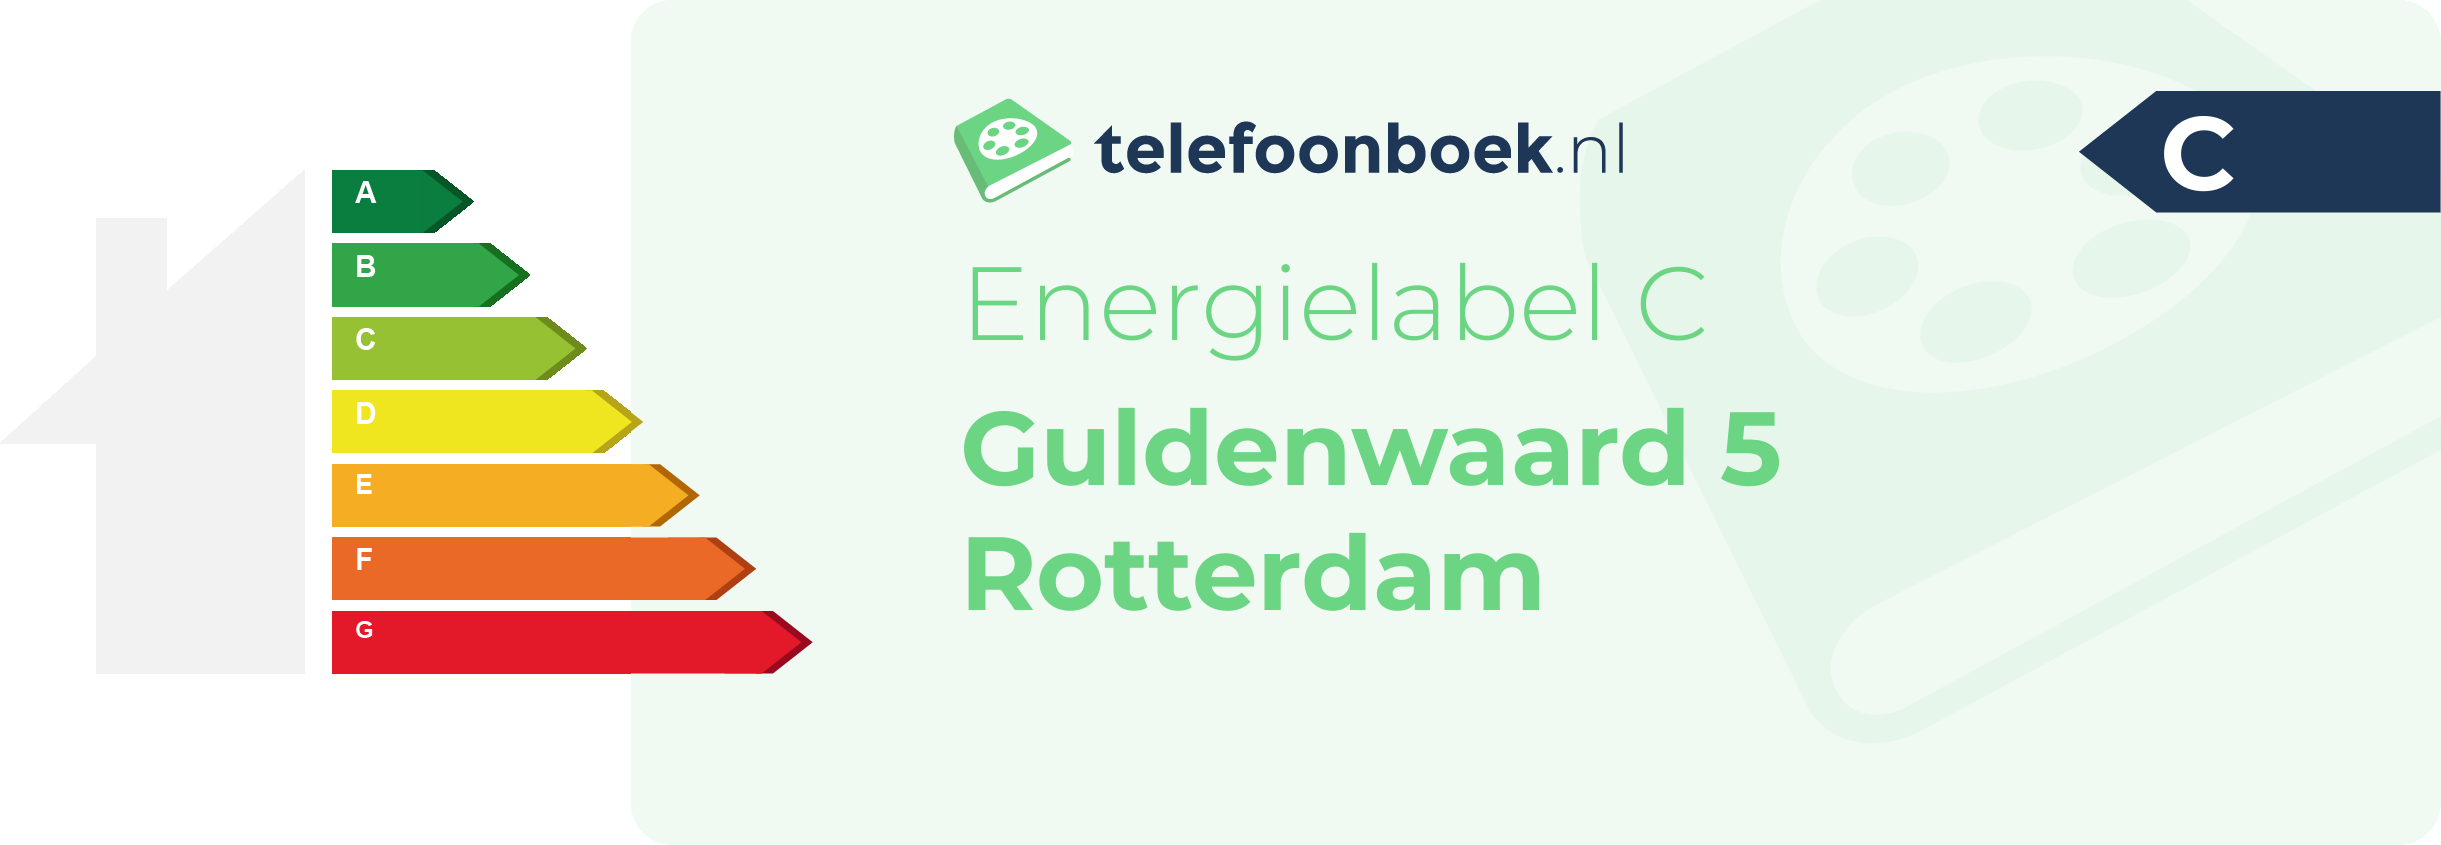 Energielabel Guldenwaard 5 Rotterdam